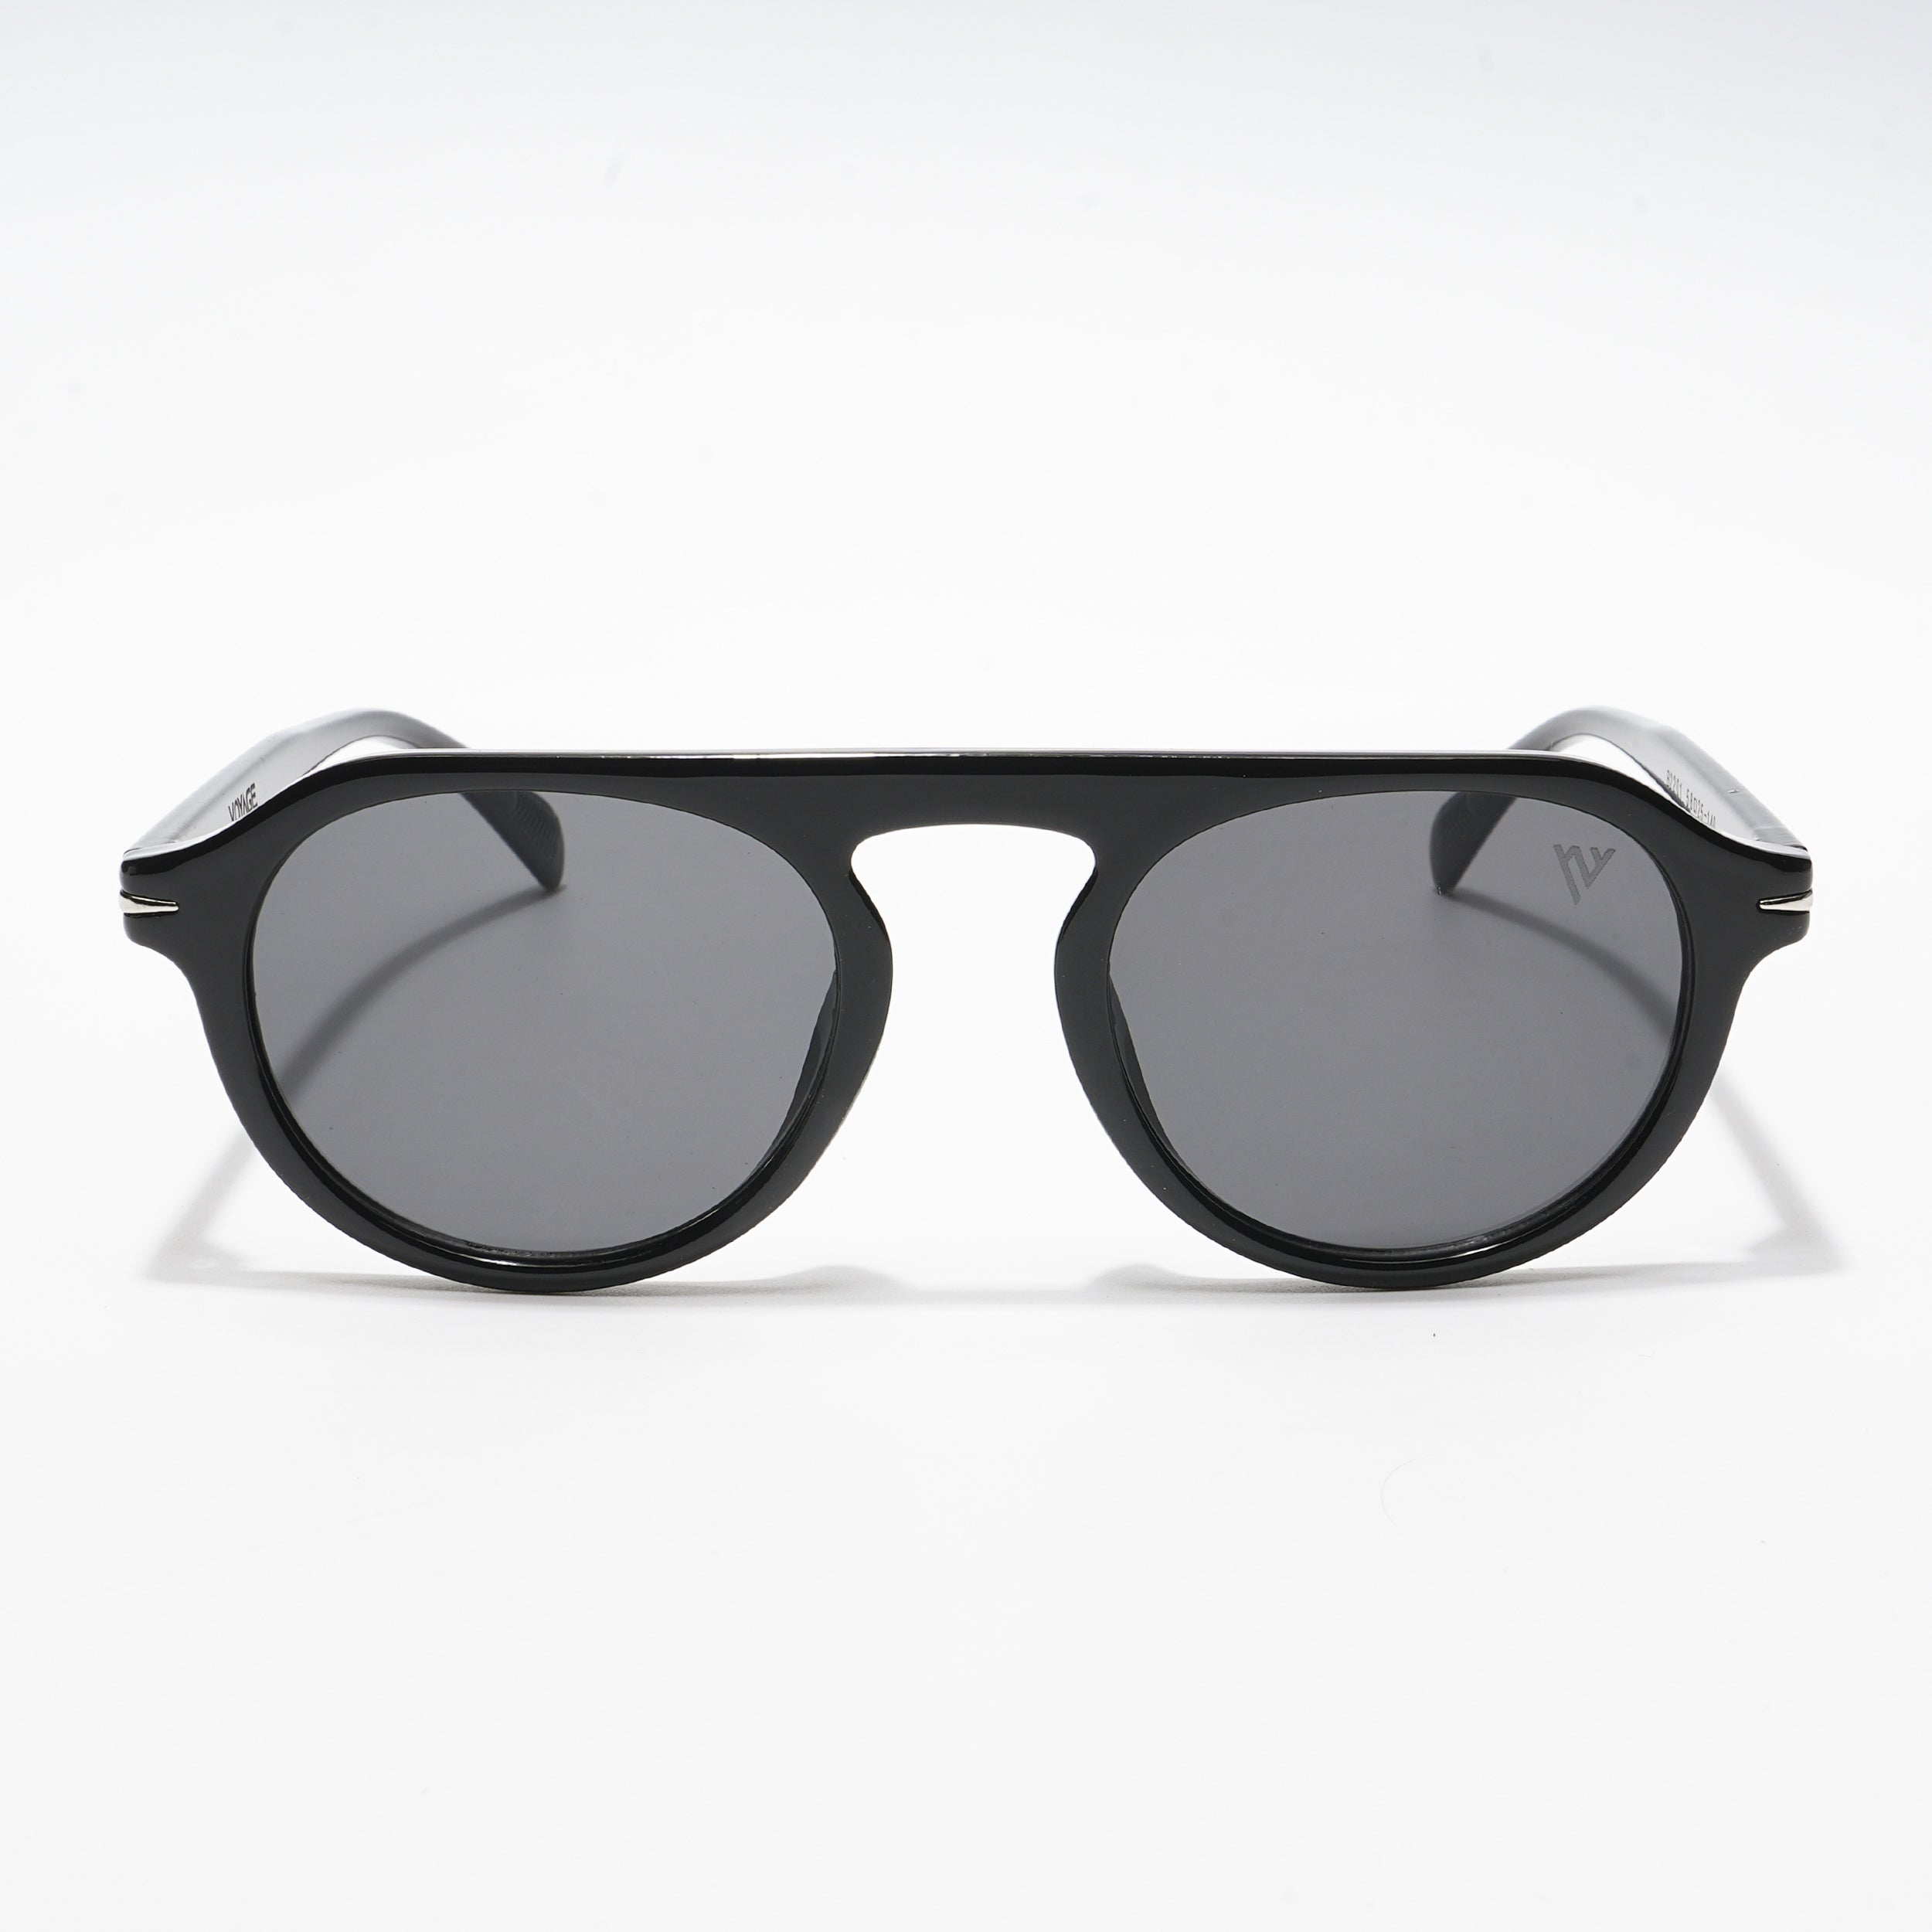 Voyage Black Round Sunglasses - MG3893